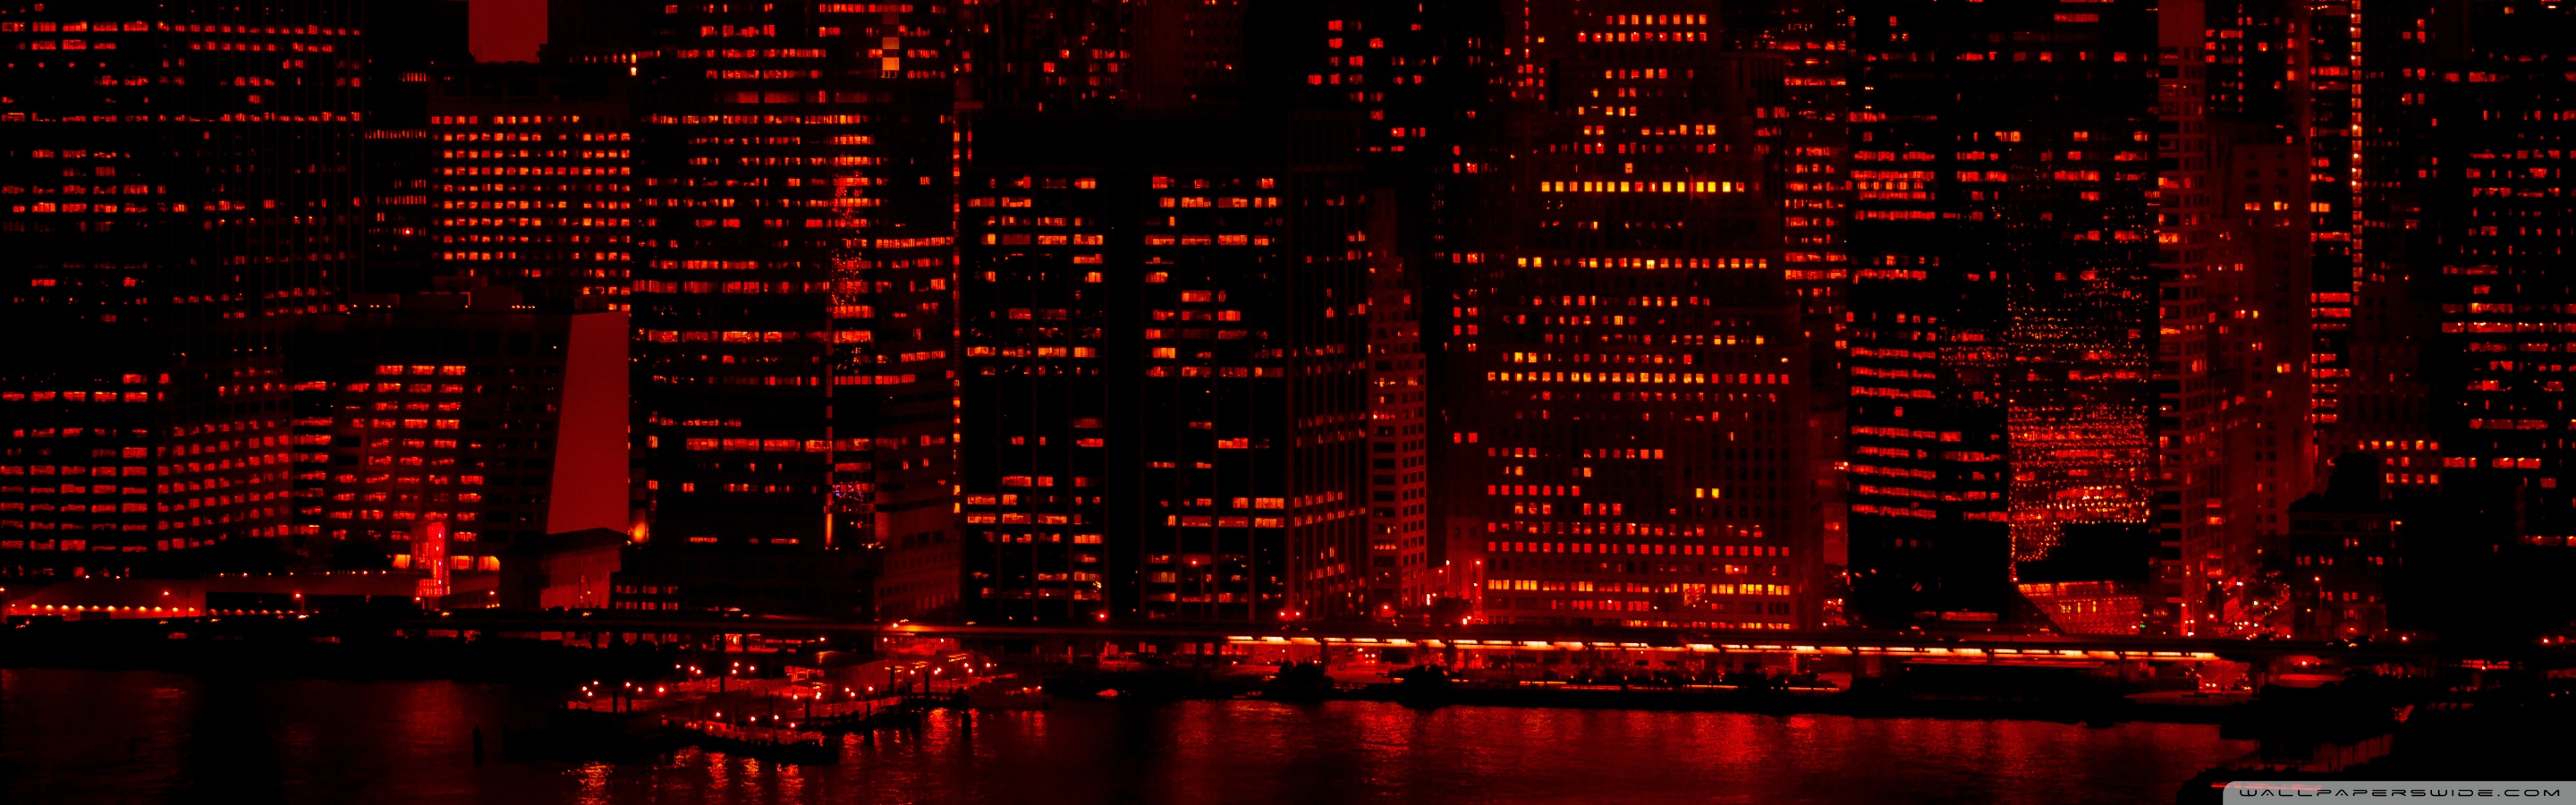 Red Sky At Night New York City Ultra HD Desktop Background Wallpaper for 4K UHD TV, Widescreen & UltraWide Desktop & Laptop, Multi Display, Dual Monitor, Tablet